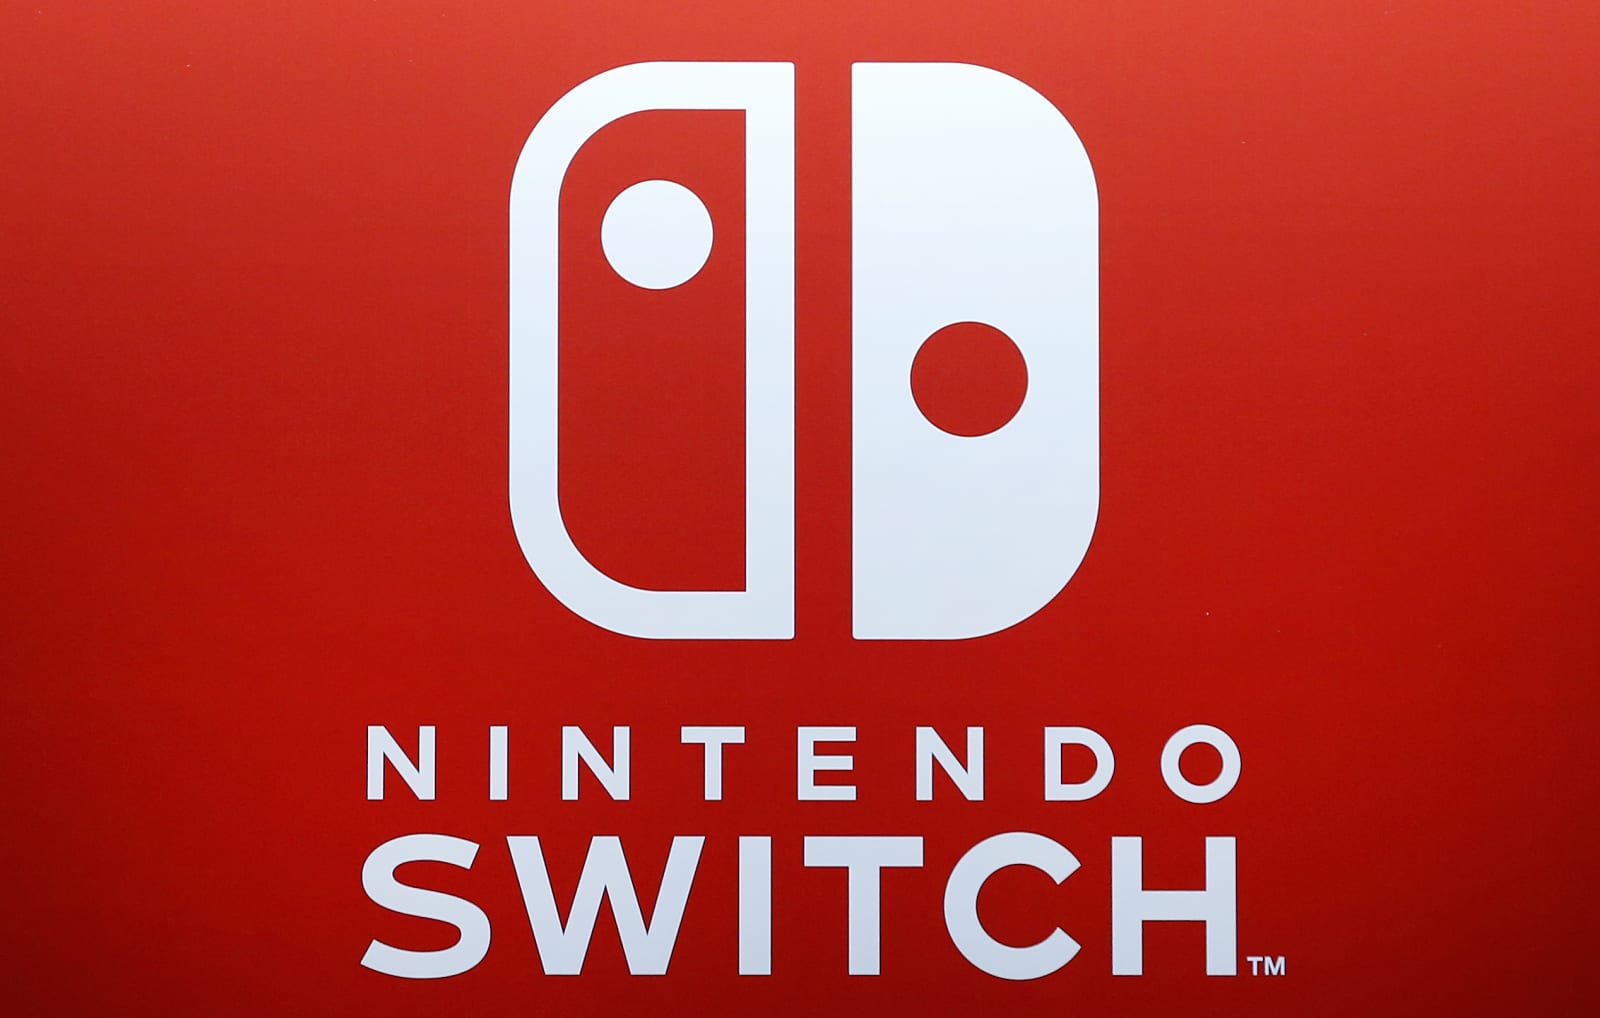 nintendo switch game ranking 2020